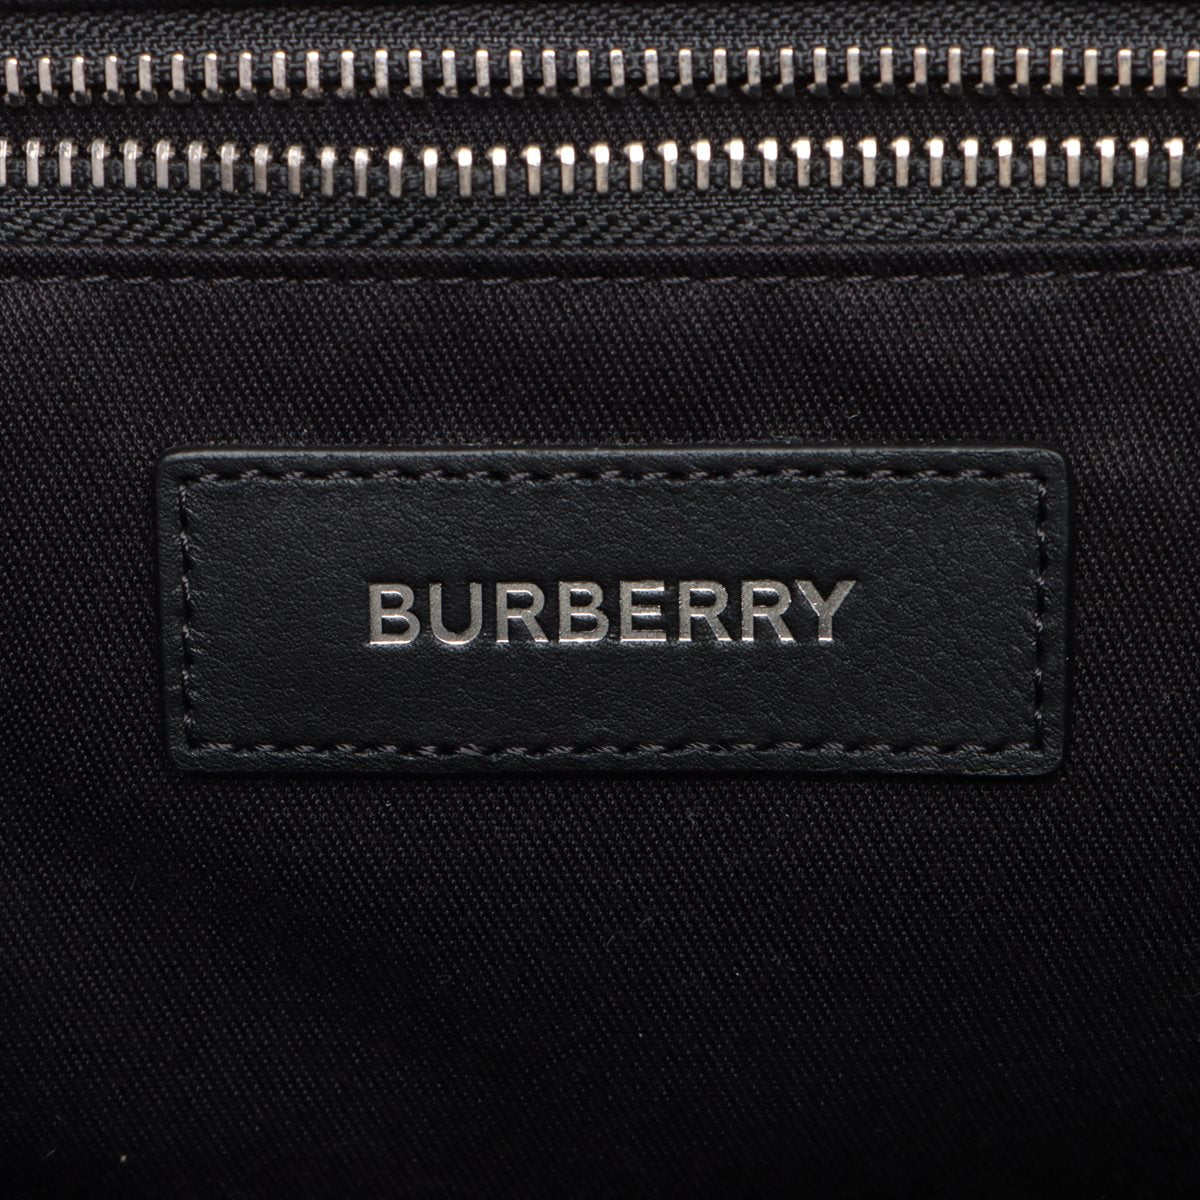 Burberry PVC Leather 2WAY Tortoise Bag Black